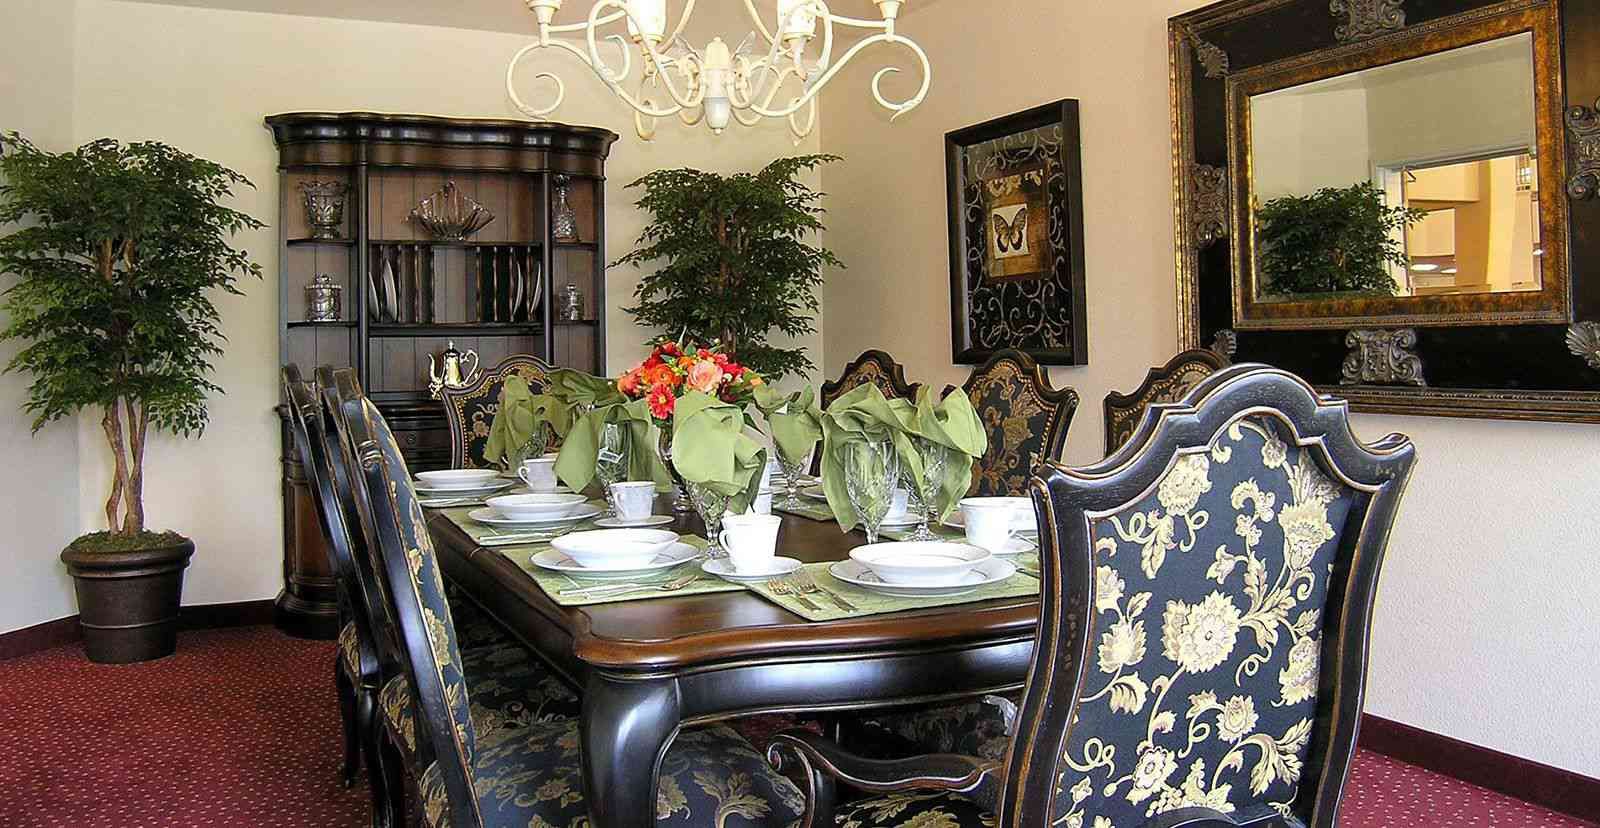 Interior view of Las Palmas senior living community featuring dining room with elegant decor.